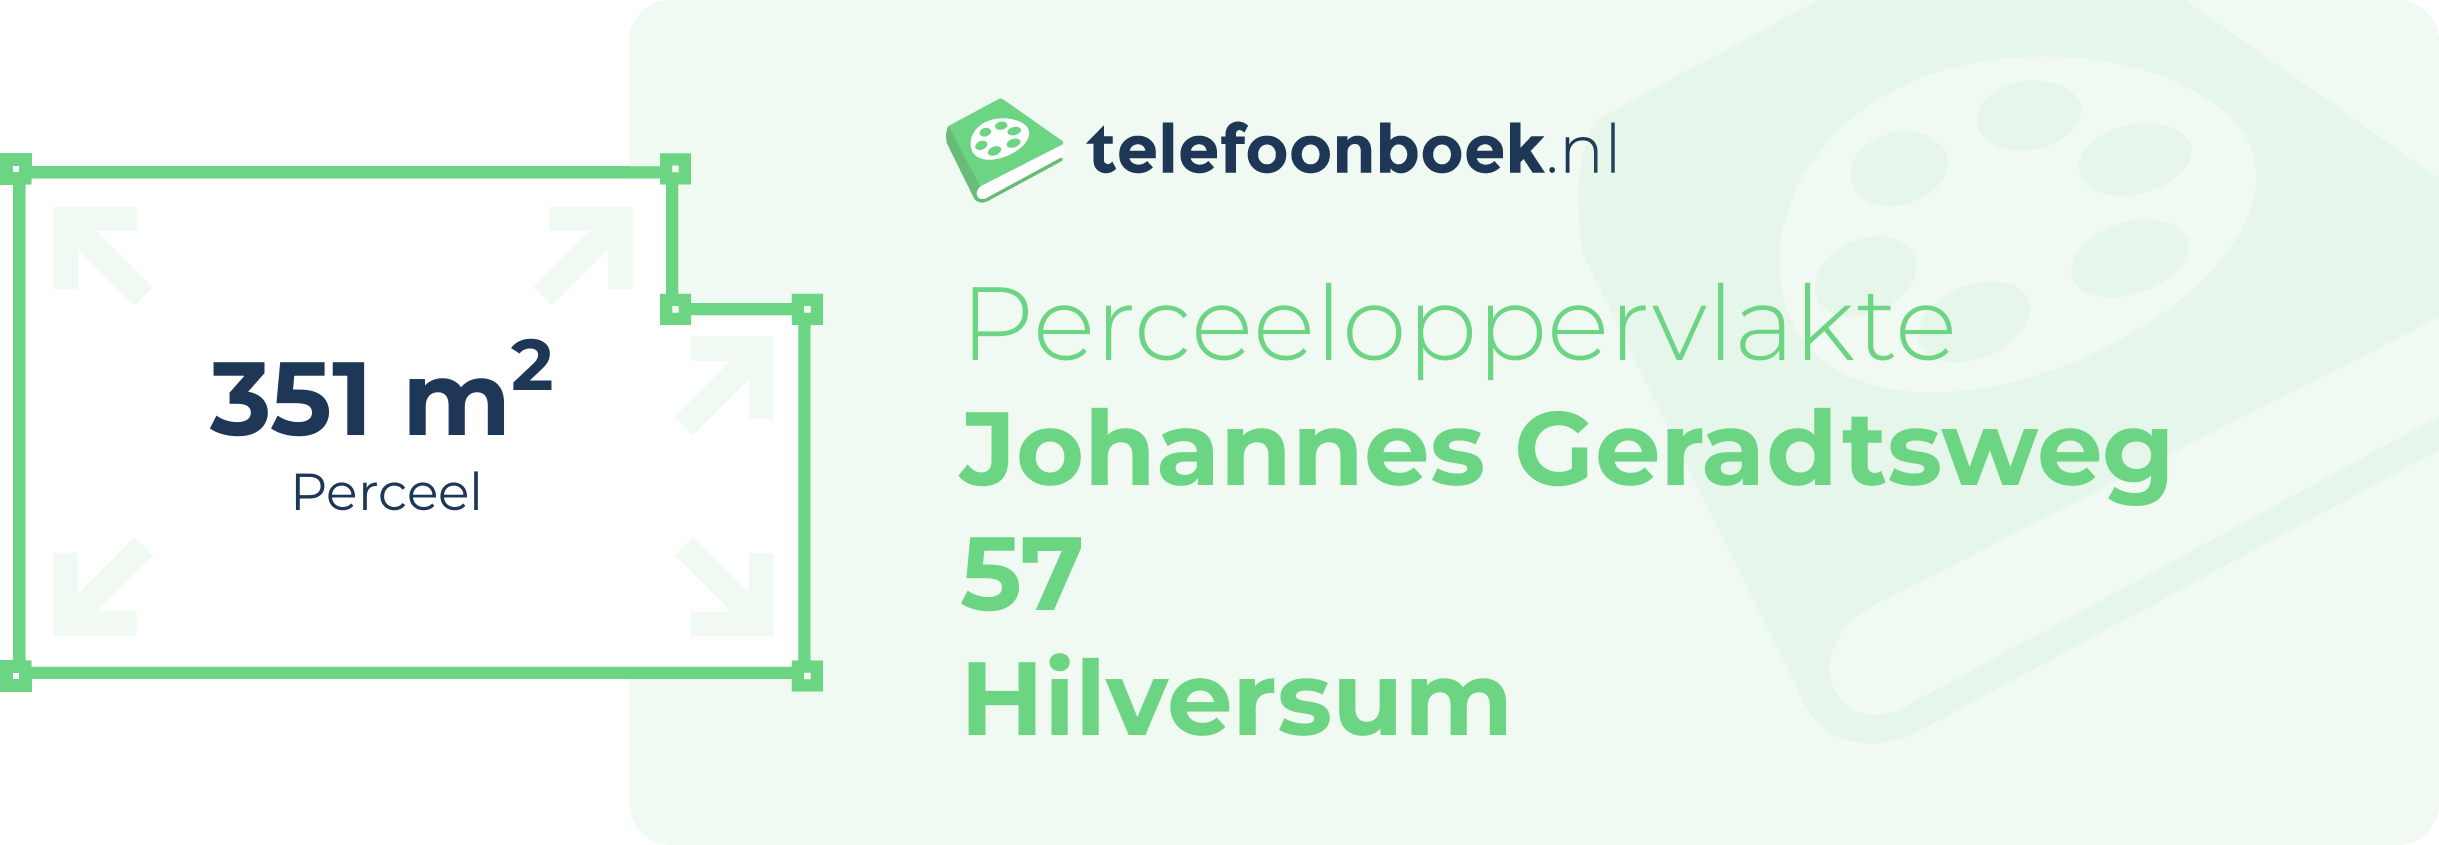 Perceeloppervlakte Johannes Geradtsweg 57 Hilversum